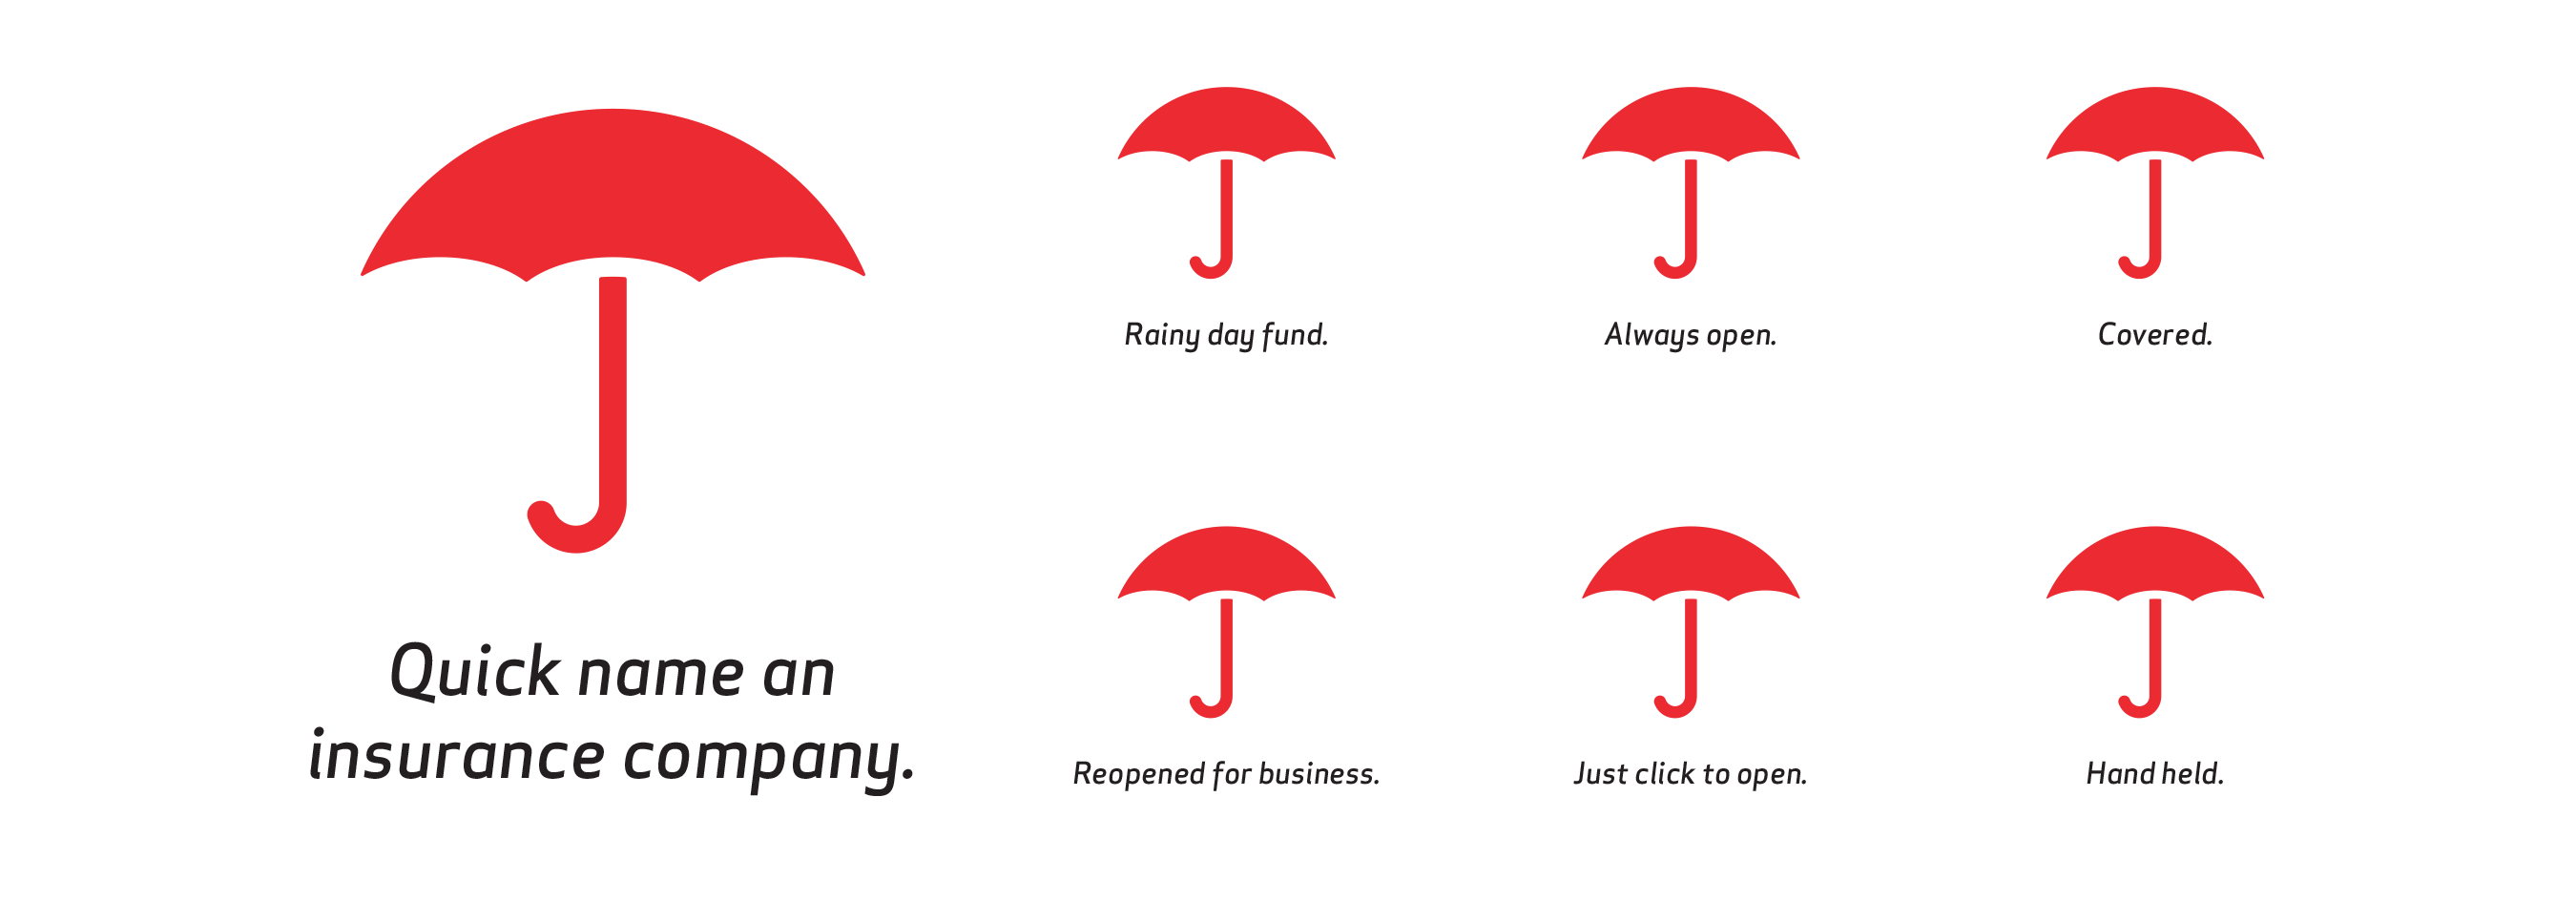 Red Umbrella Logo - Travelers Insurance - Replace